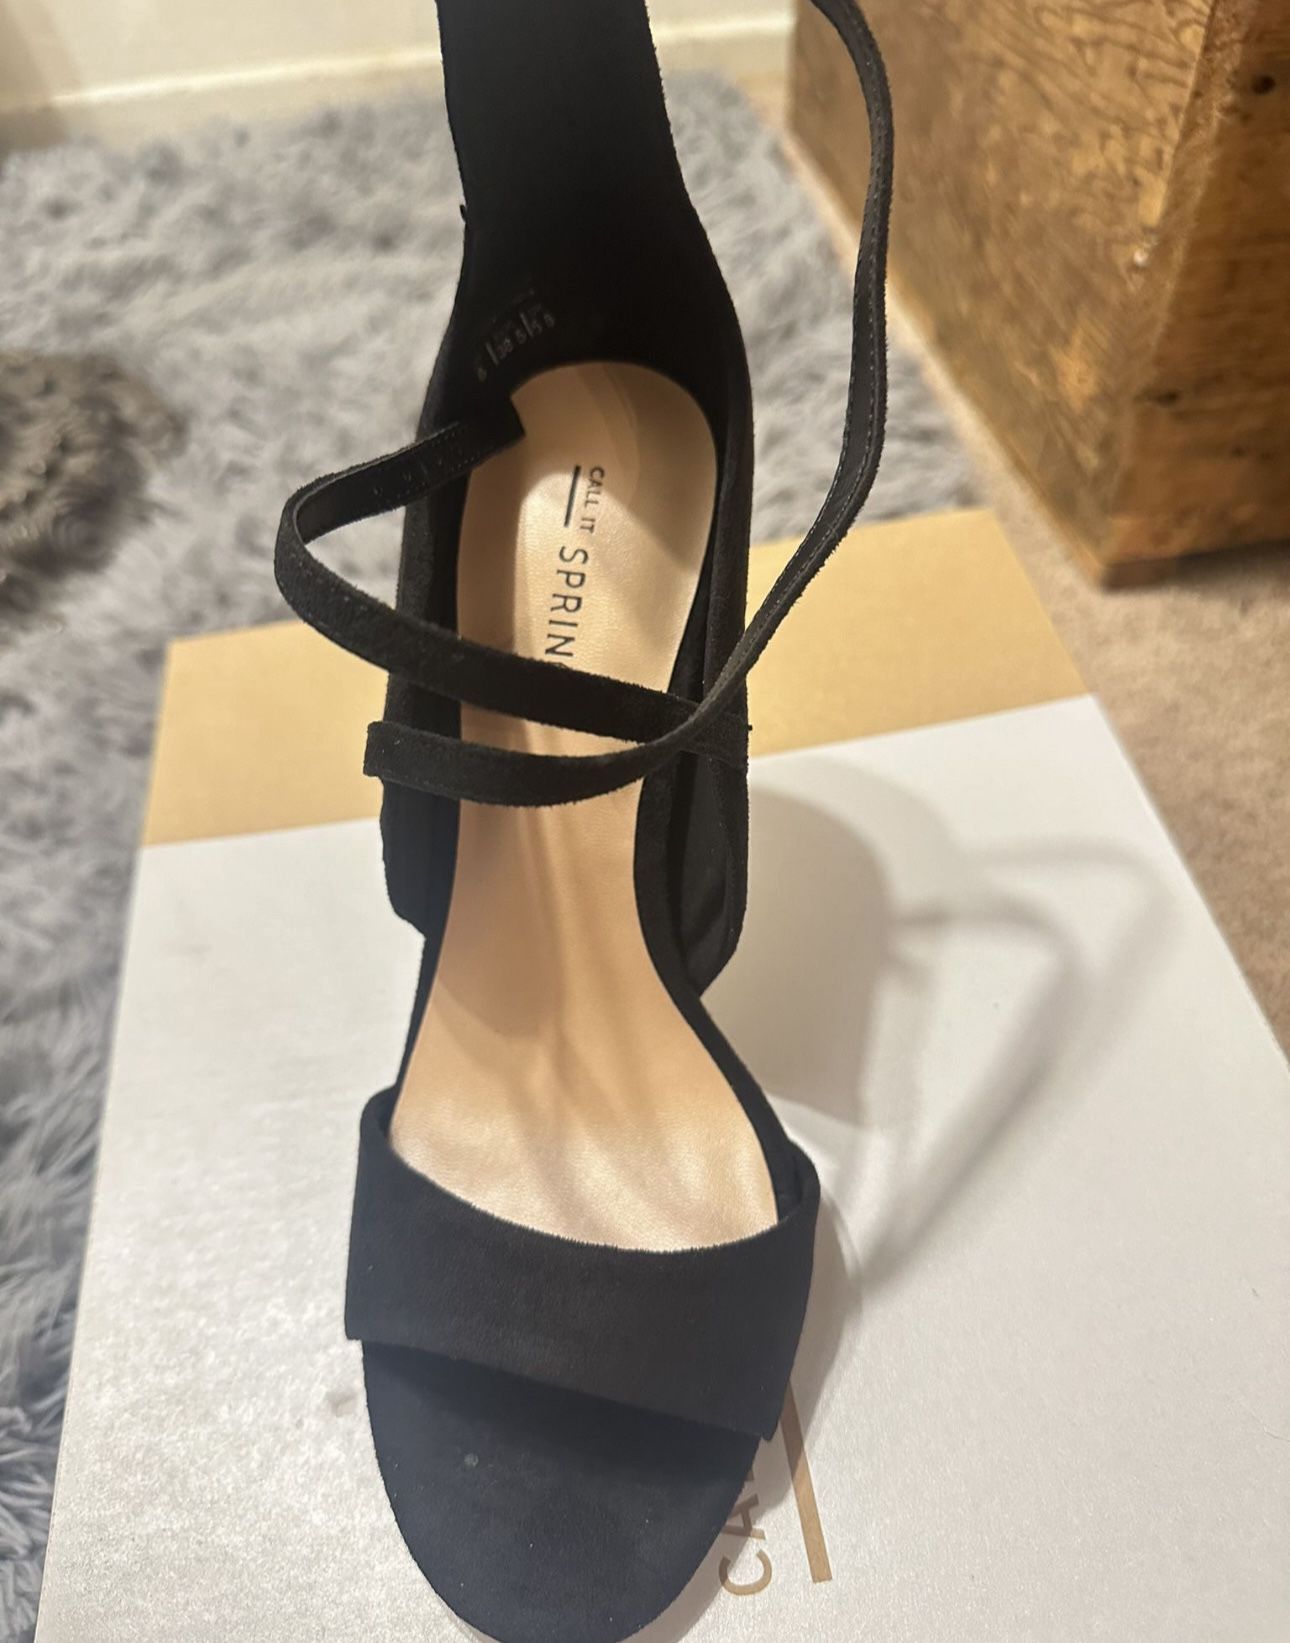 New in box size 8 black 8 heels, very ELEGANT 